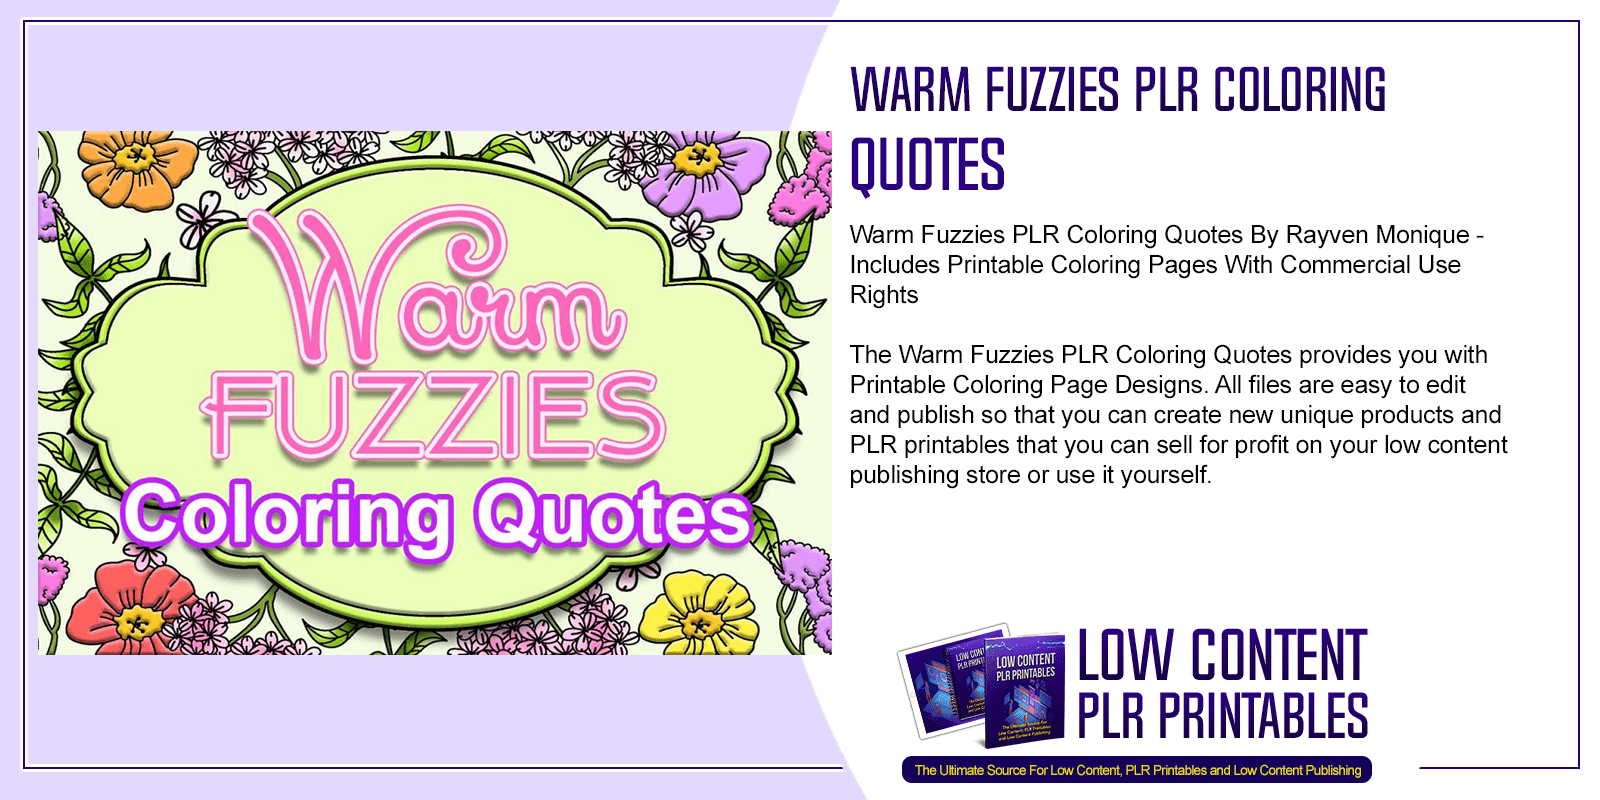 Warm Fuzzies PLR Coloring Quotes